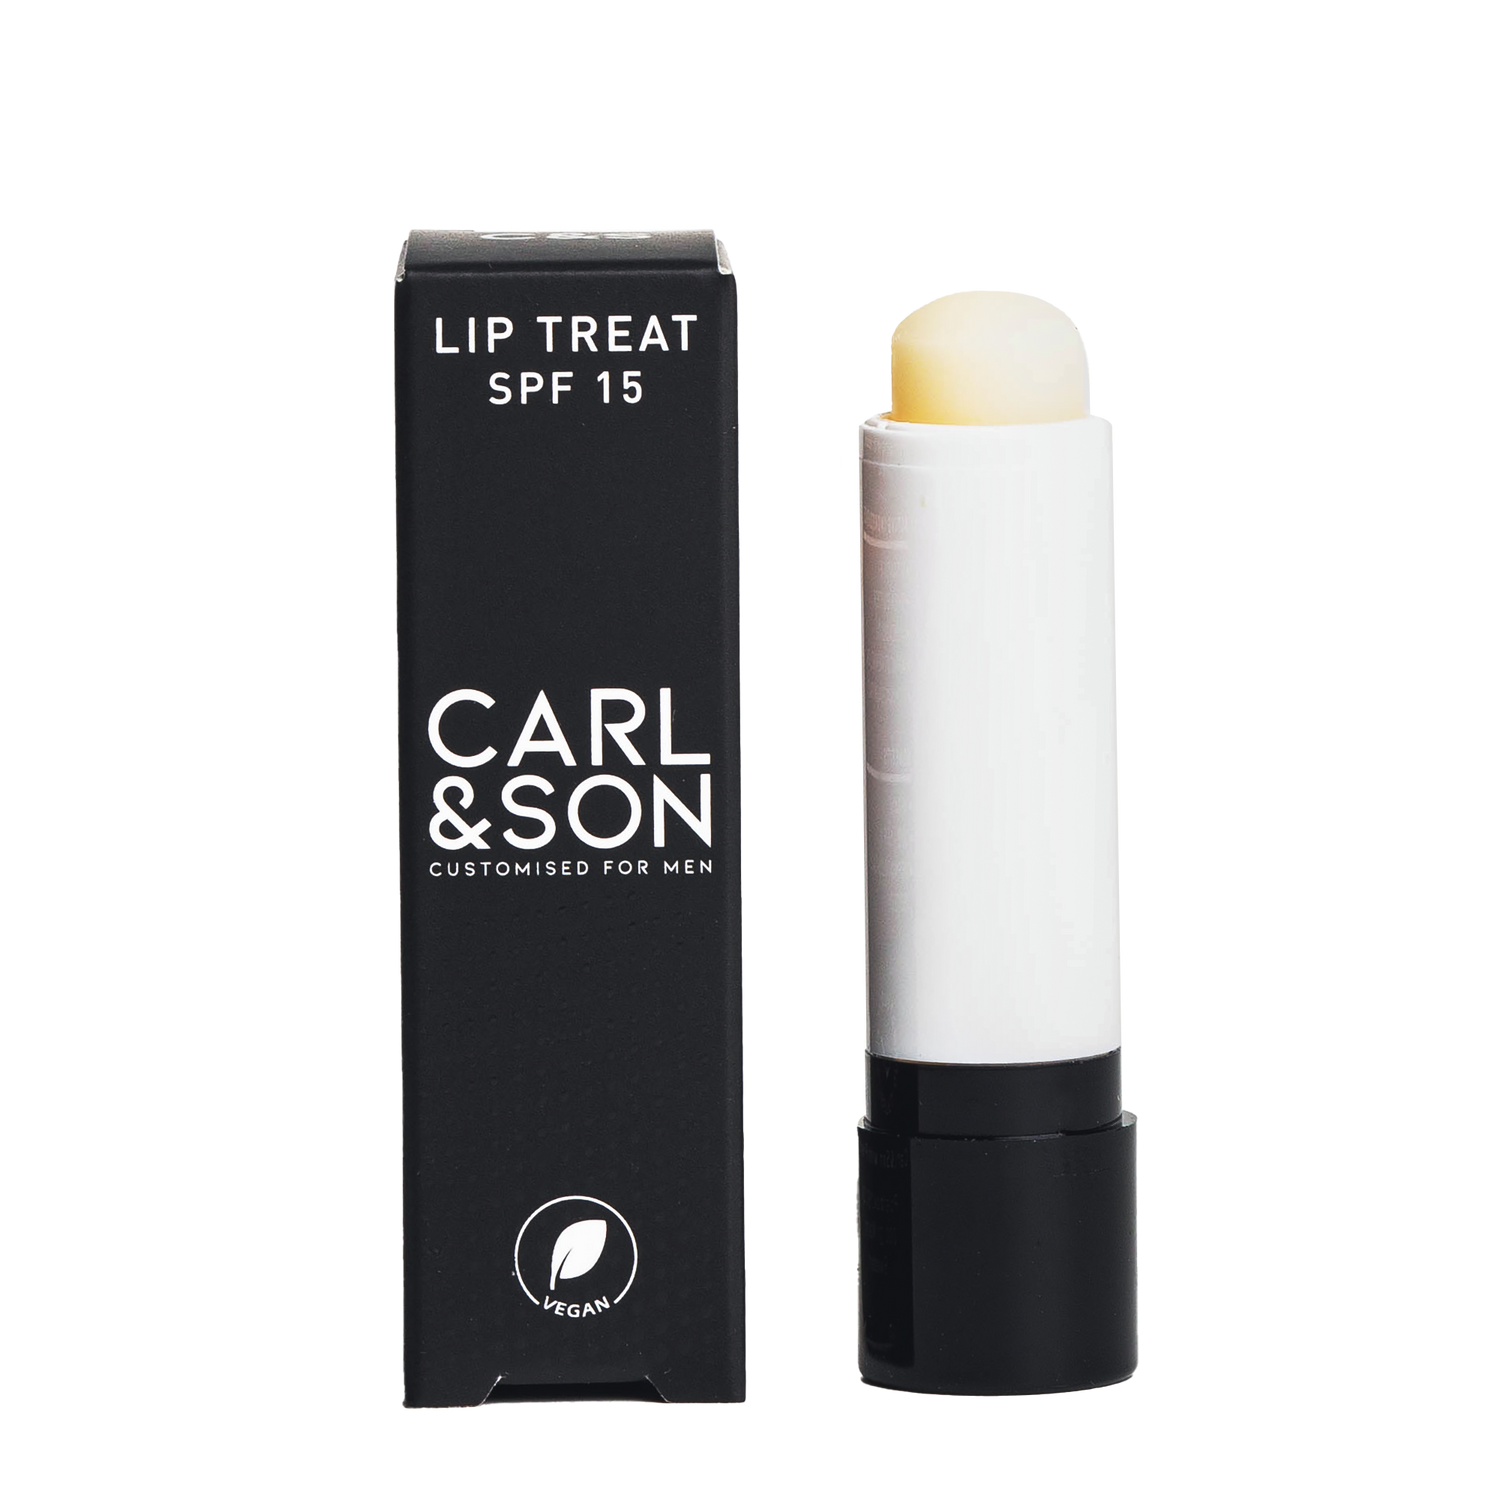 lip treat cartonage and open product